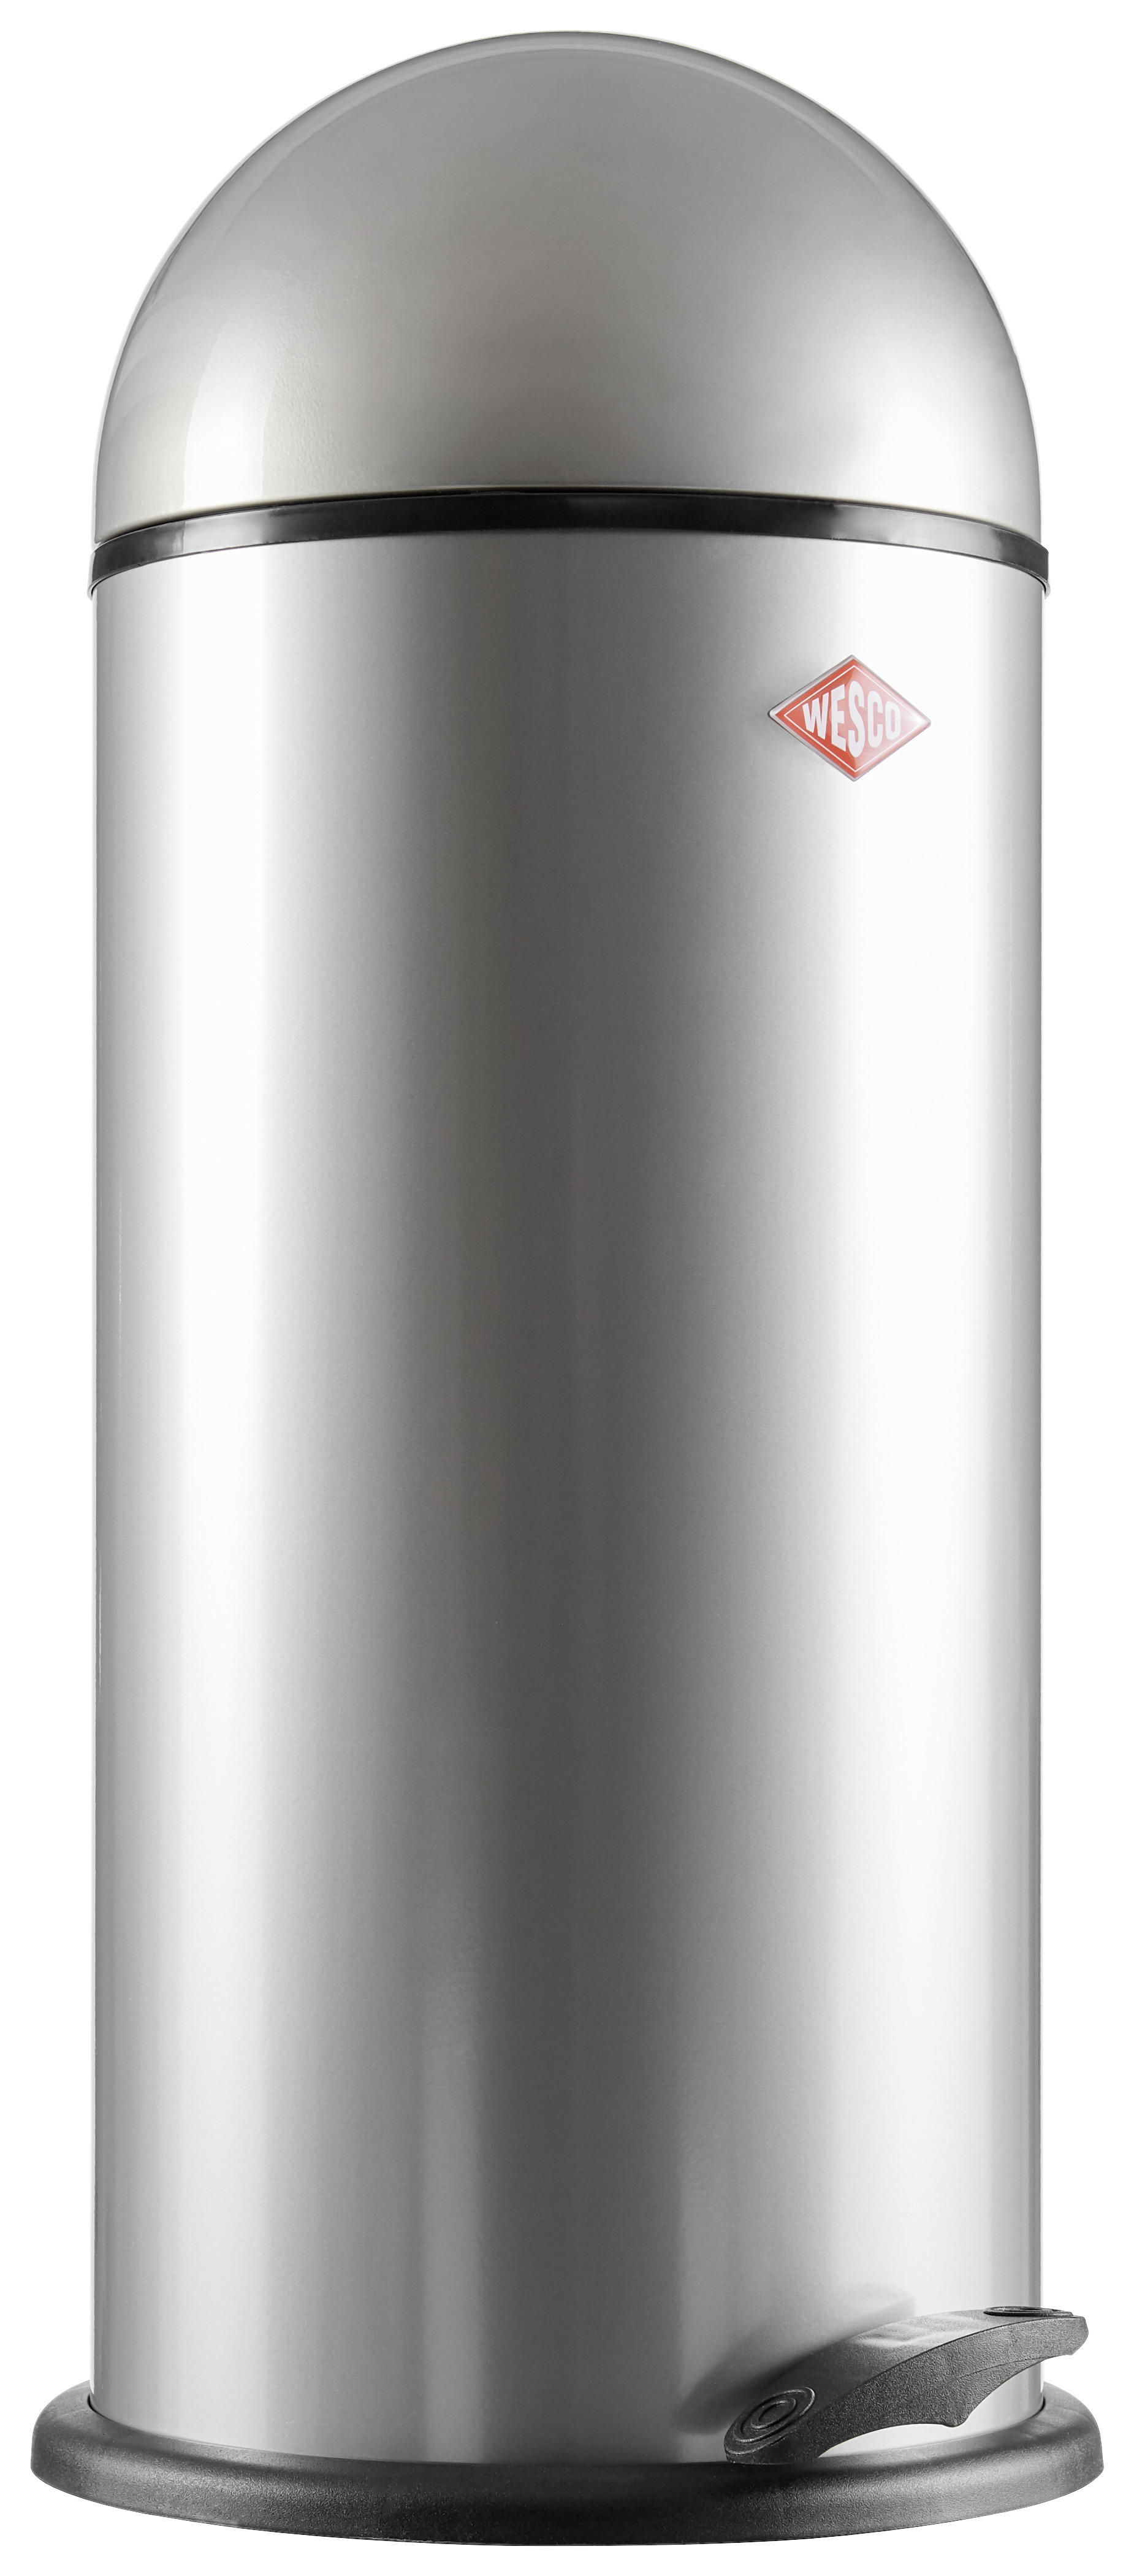 ABFALLSAMMLER CAPBOY MAXI 22 L  - Silberfarben, Basics, Metall (30/68cm) - Wesco